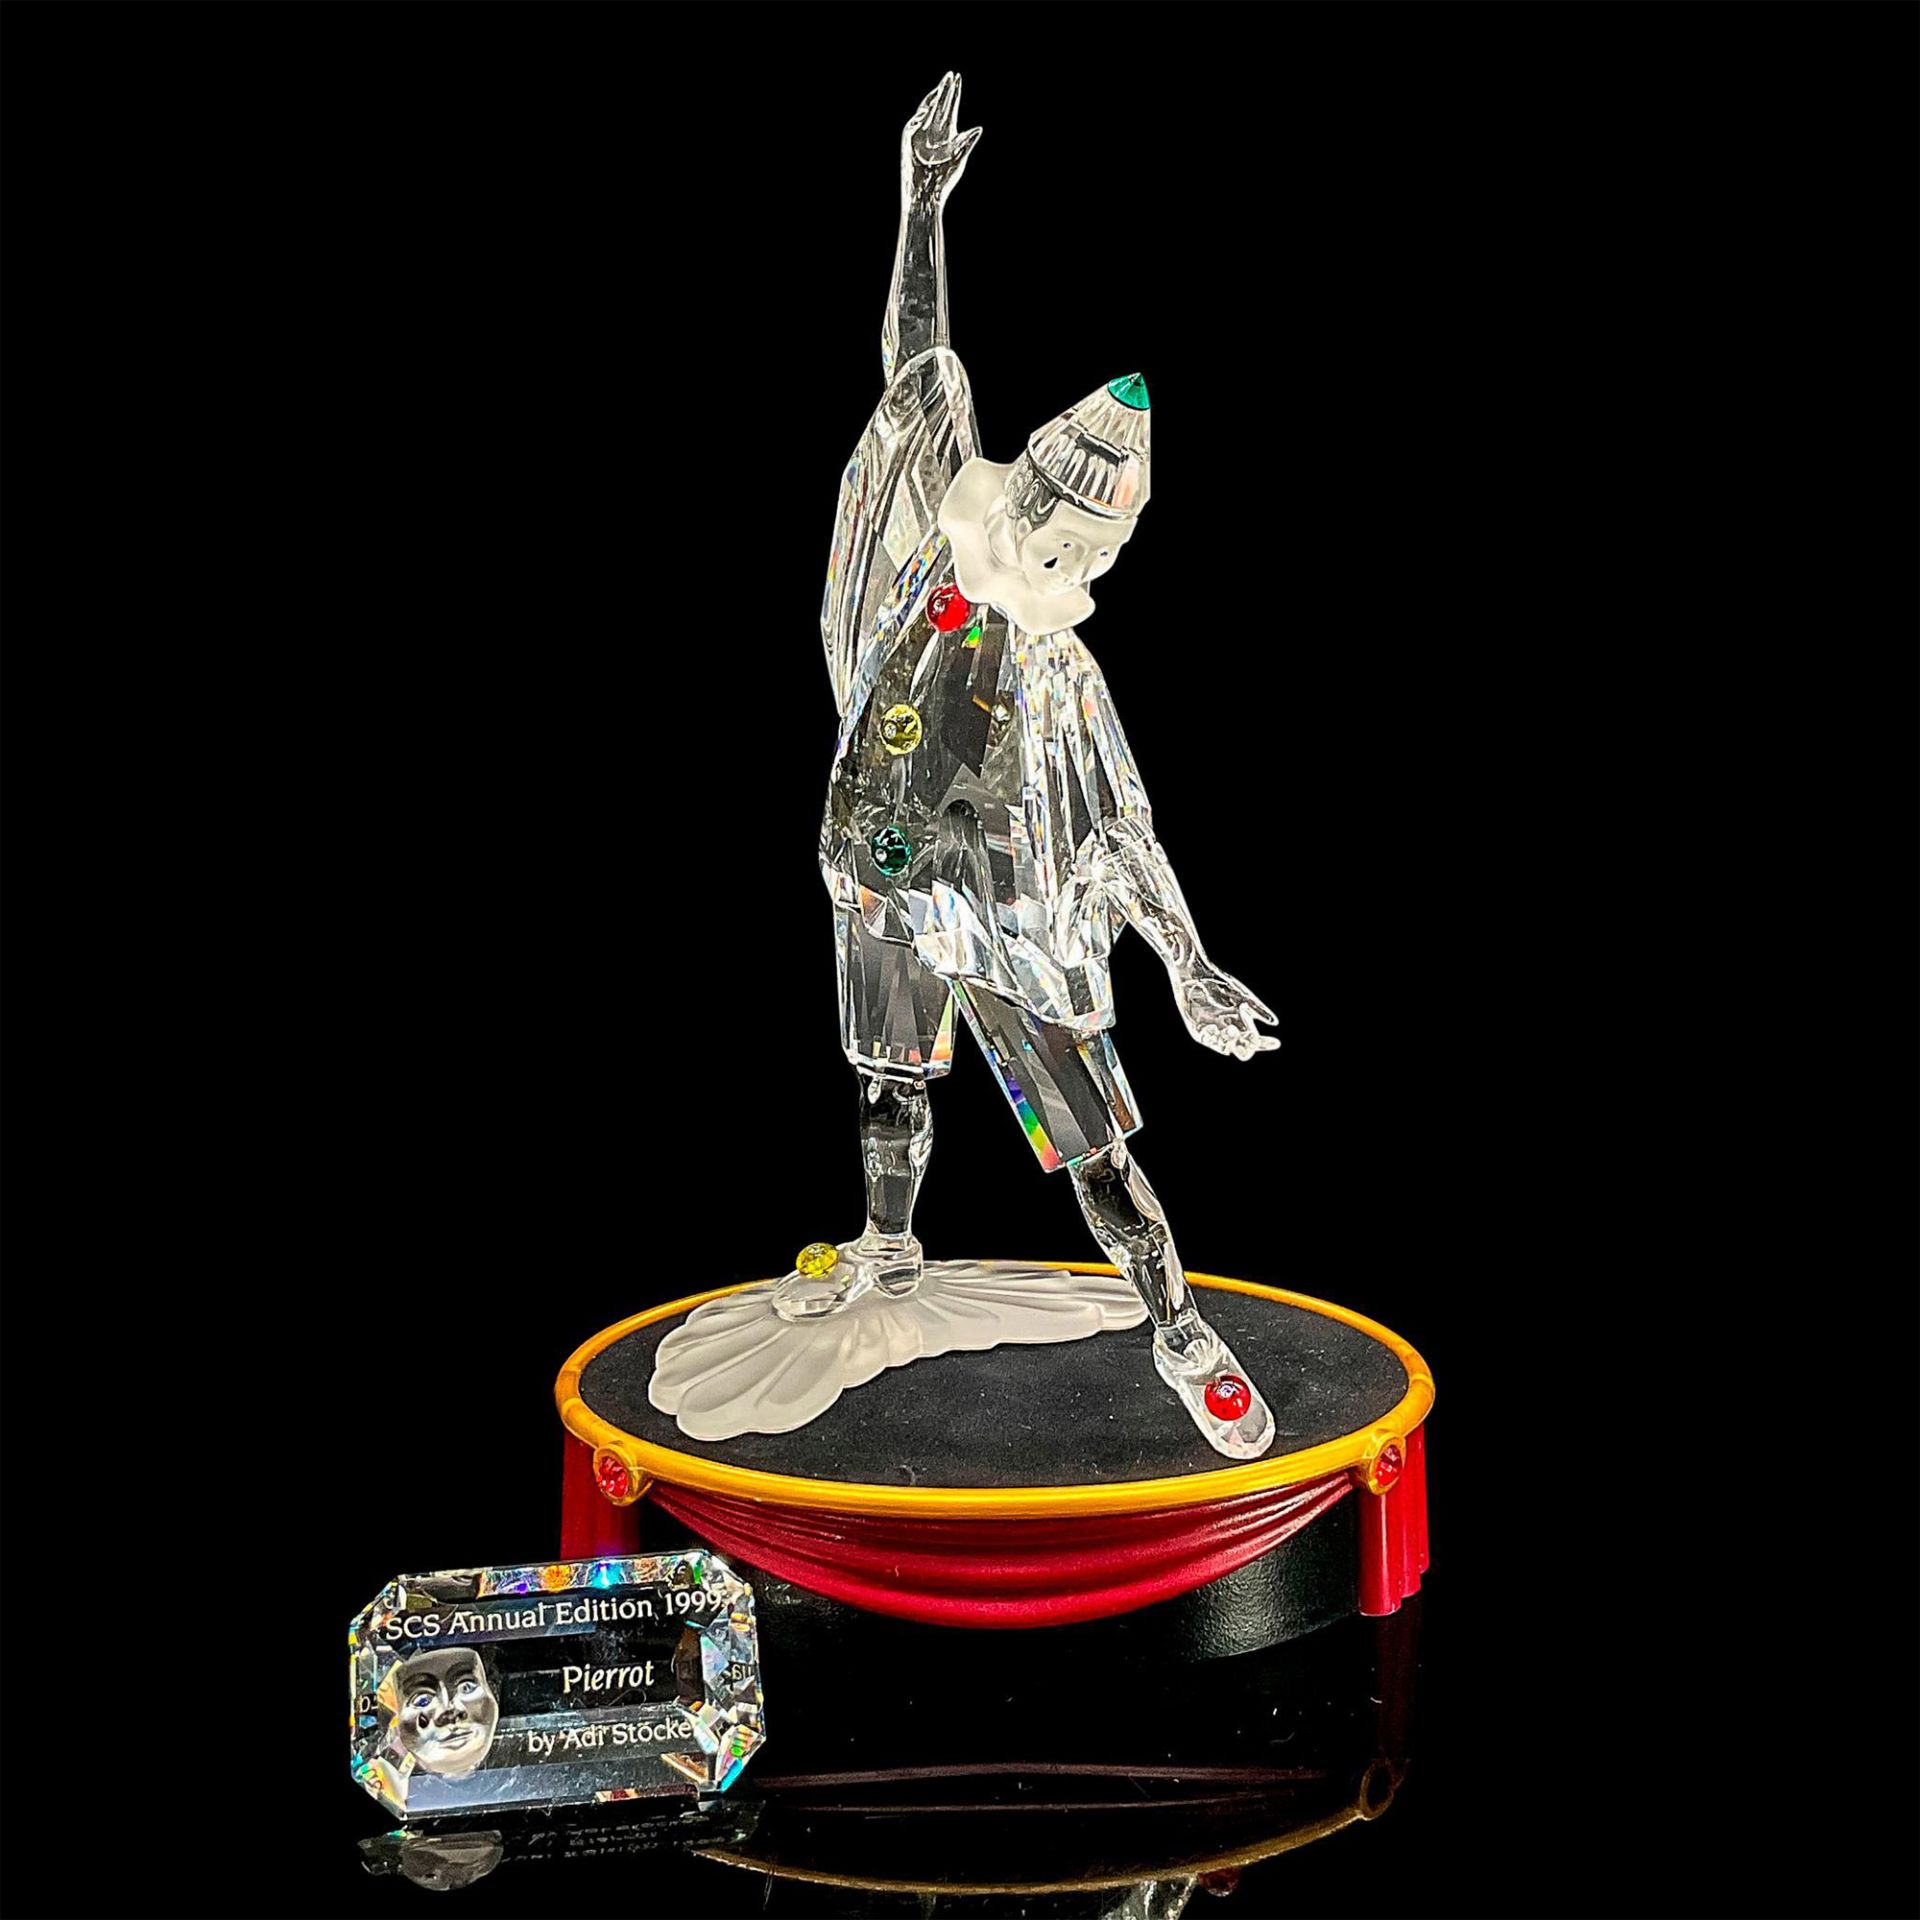 3pc Swarovski Crystal Figurine, Pierrot, Base + Plaque